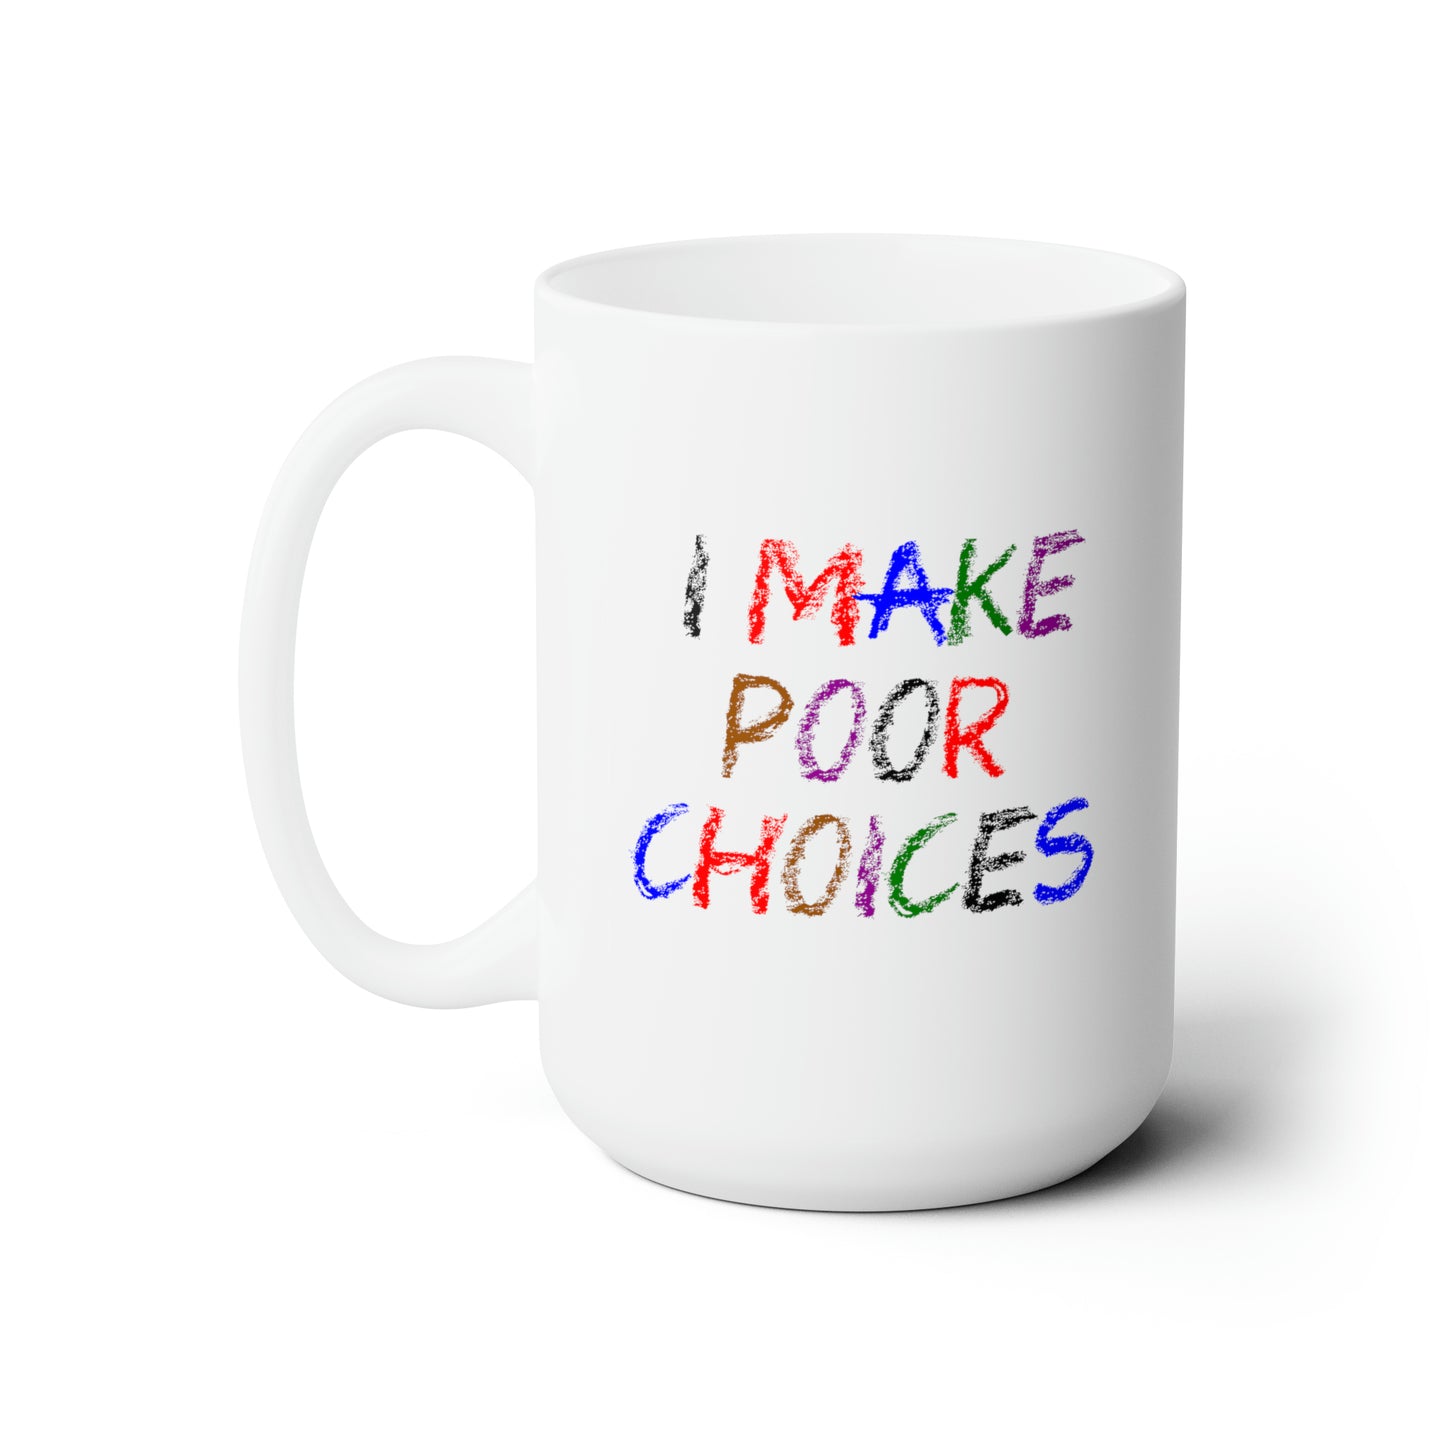 I Make Poor Choices - Coffee Mug